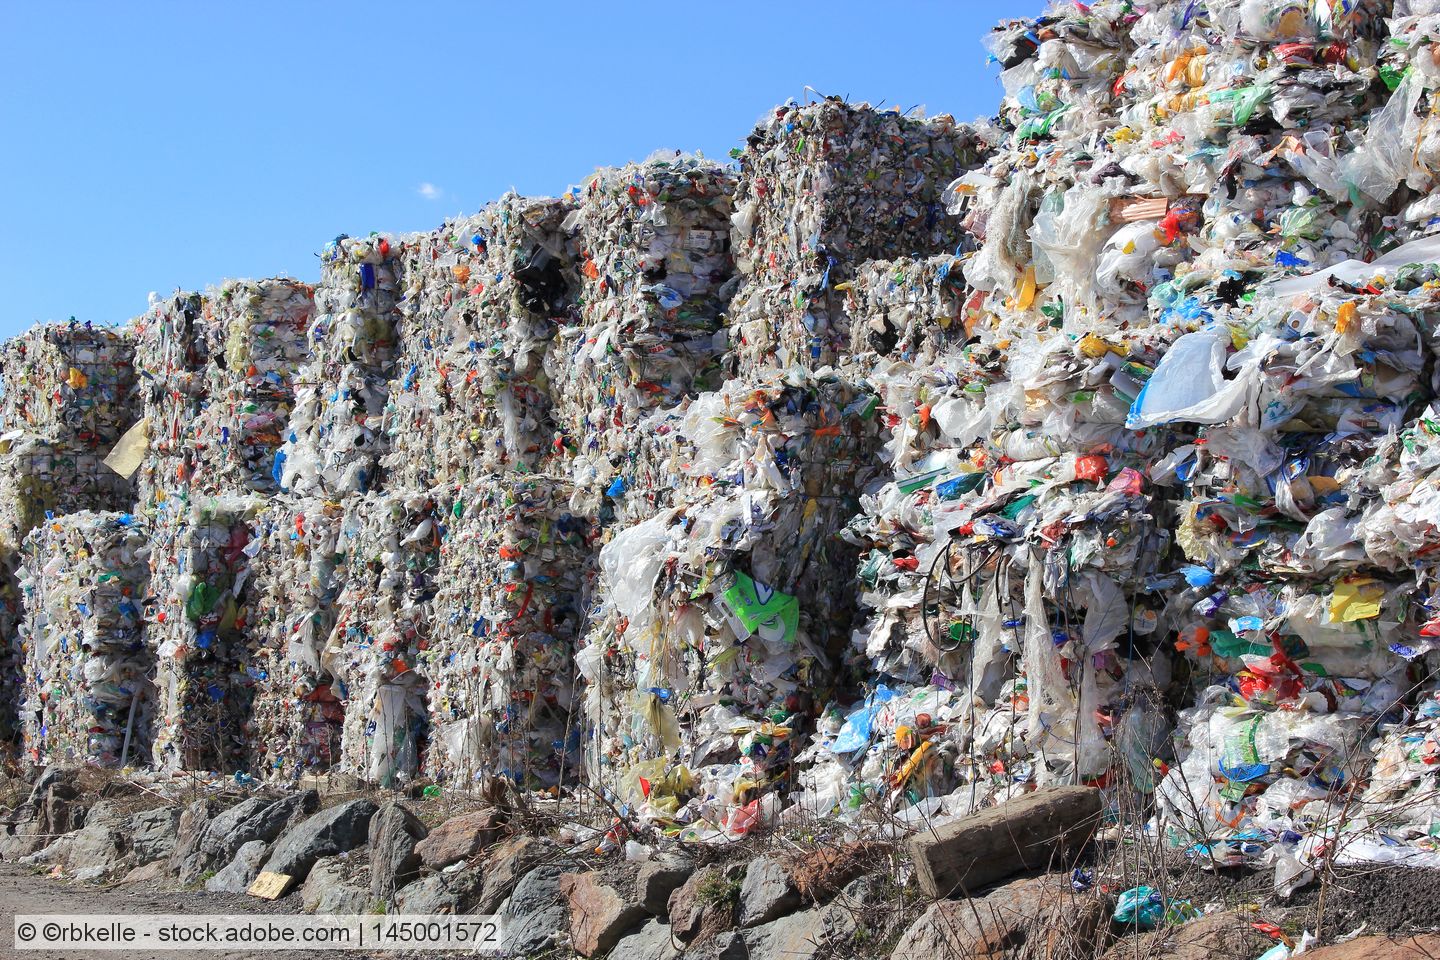 Kunststoffrecycler planen weiteren Kapazitätsausbau